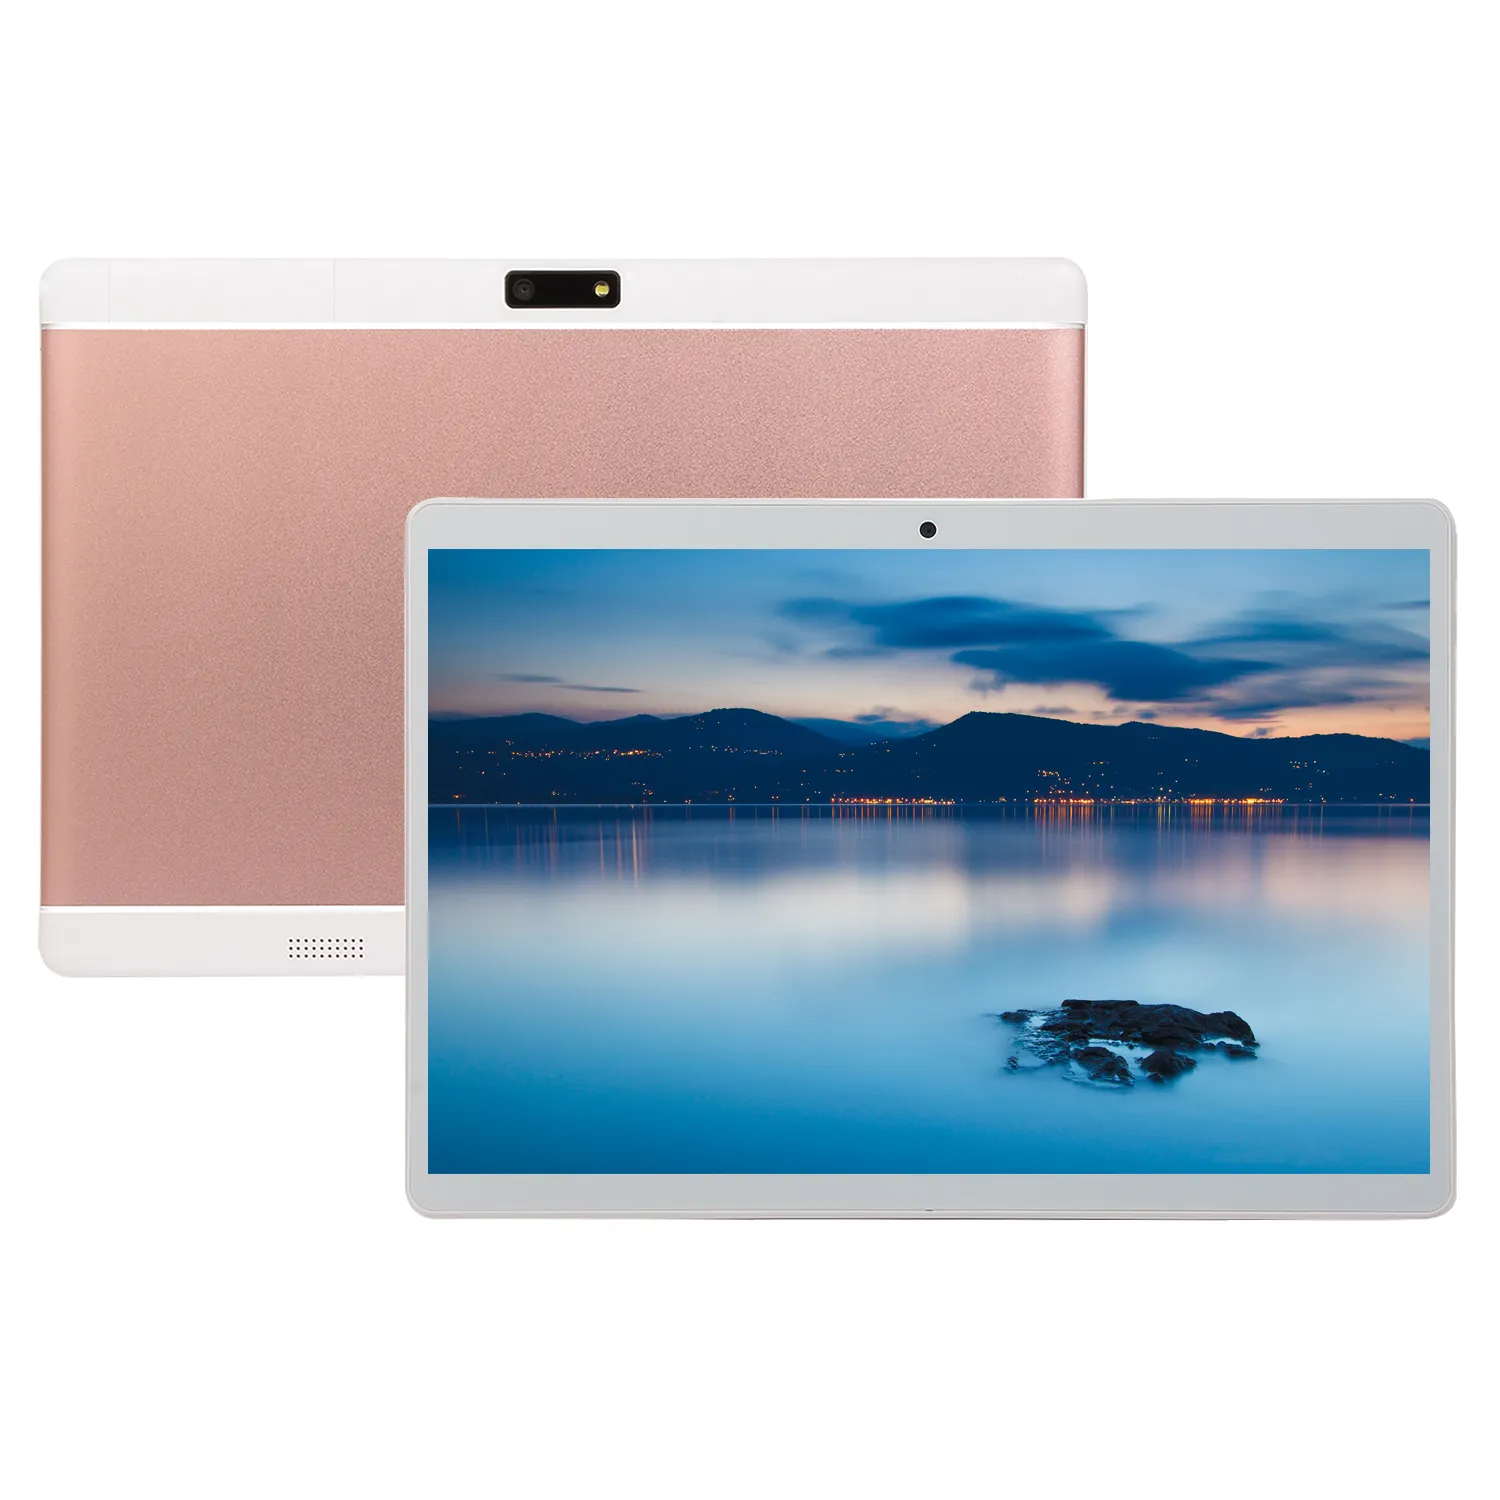 Hot Seller Quad Core 32GB Dual-Kameras 1280*800 IPS Günstige 10,1-Zoll-Tablets Hoch auflösende Kinder Pädagogische Android Tablet PC